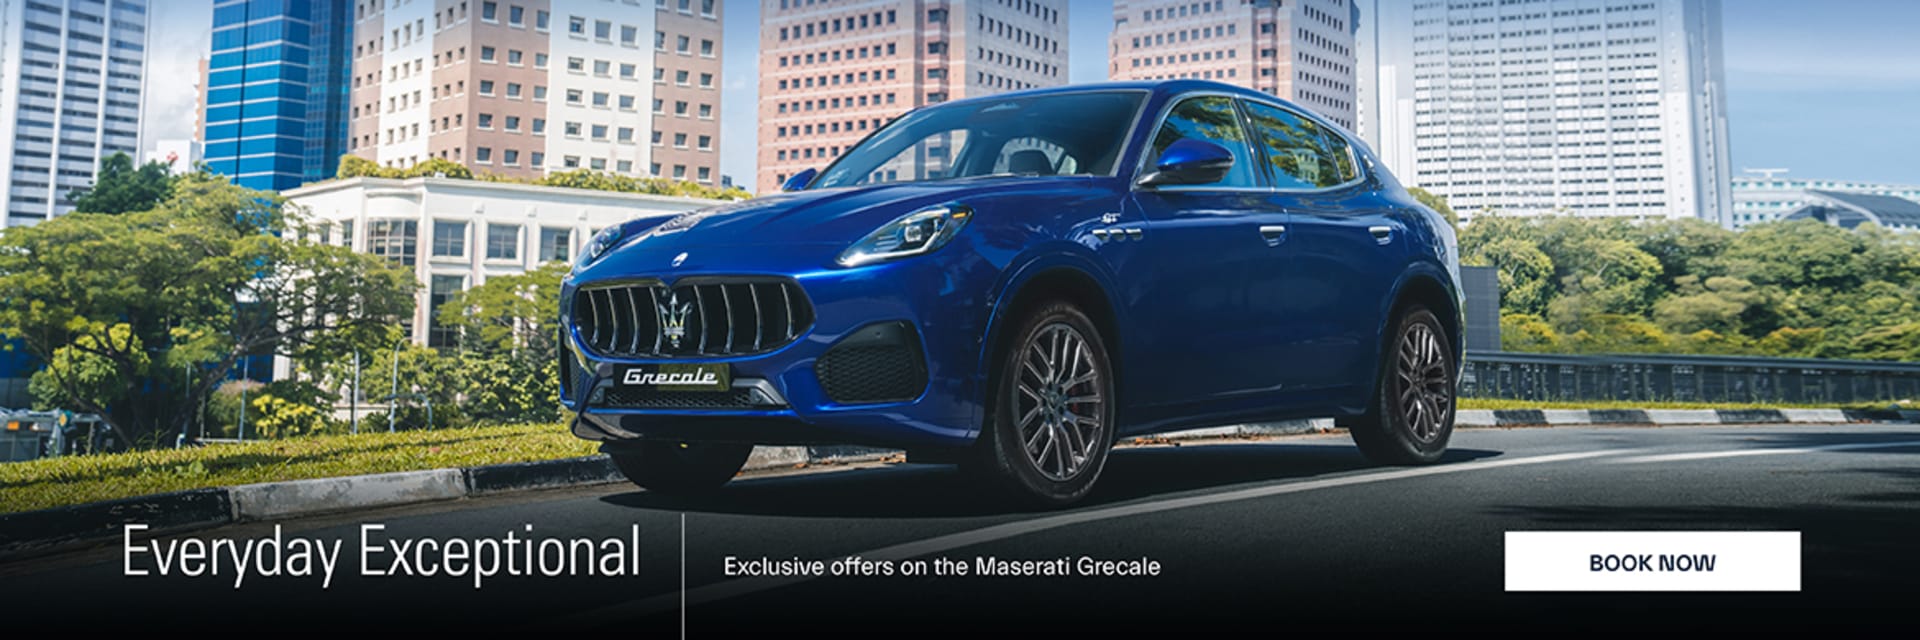 Maserati Grecale Offers